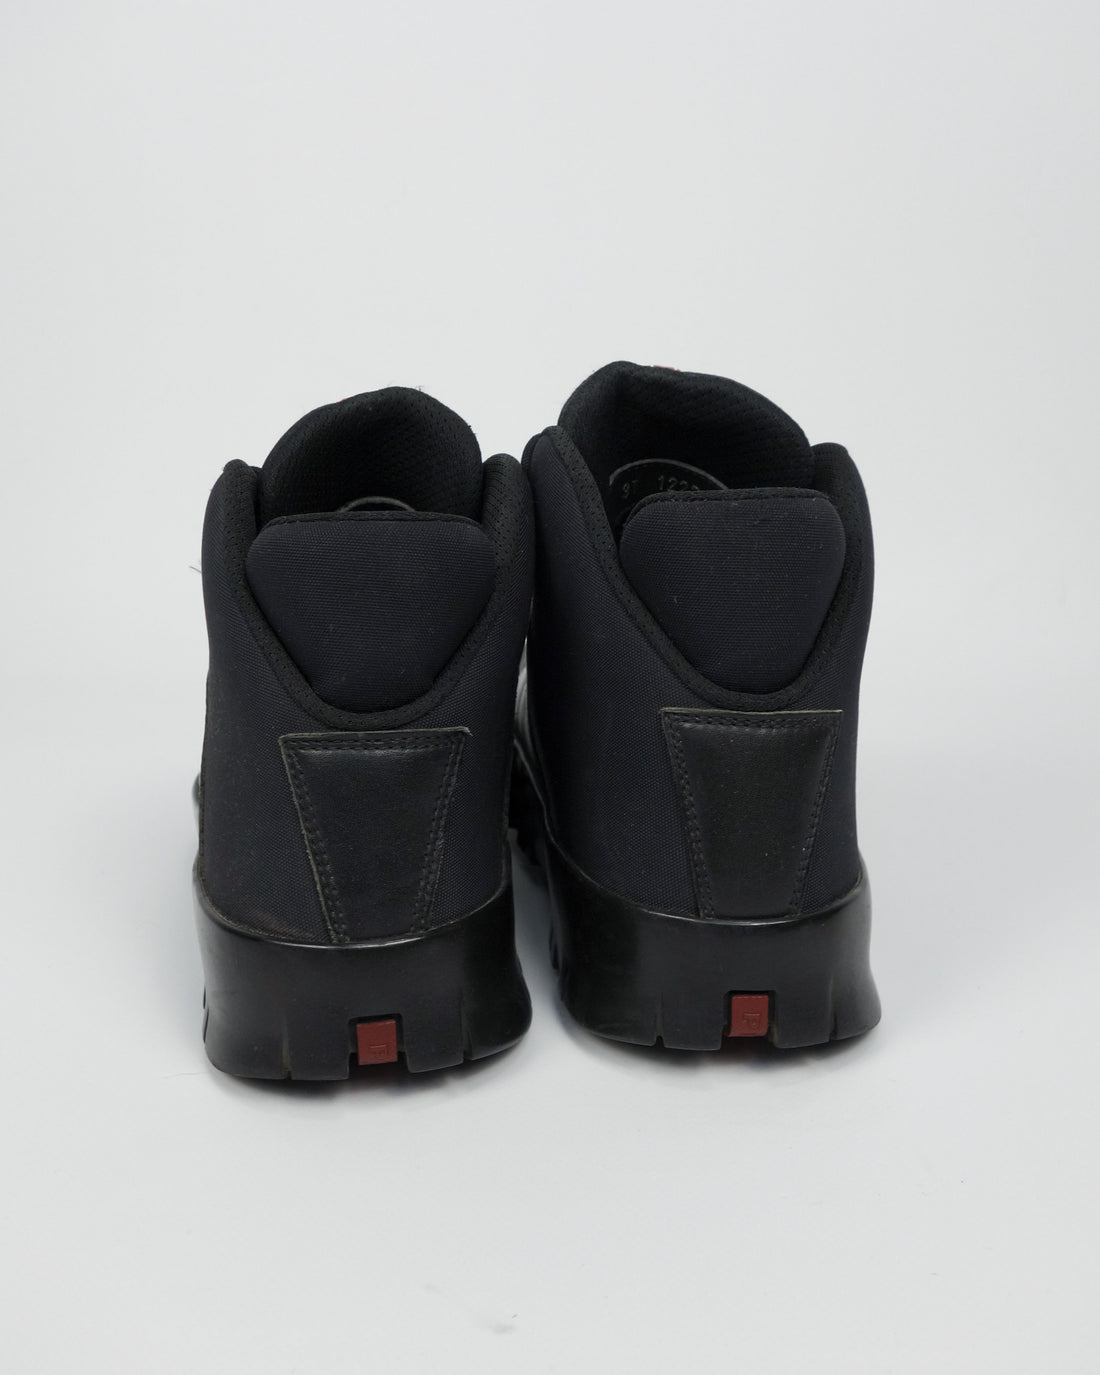 Prada Sport Black Leather Mid Boots 2000's